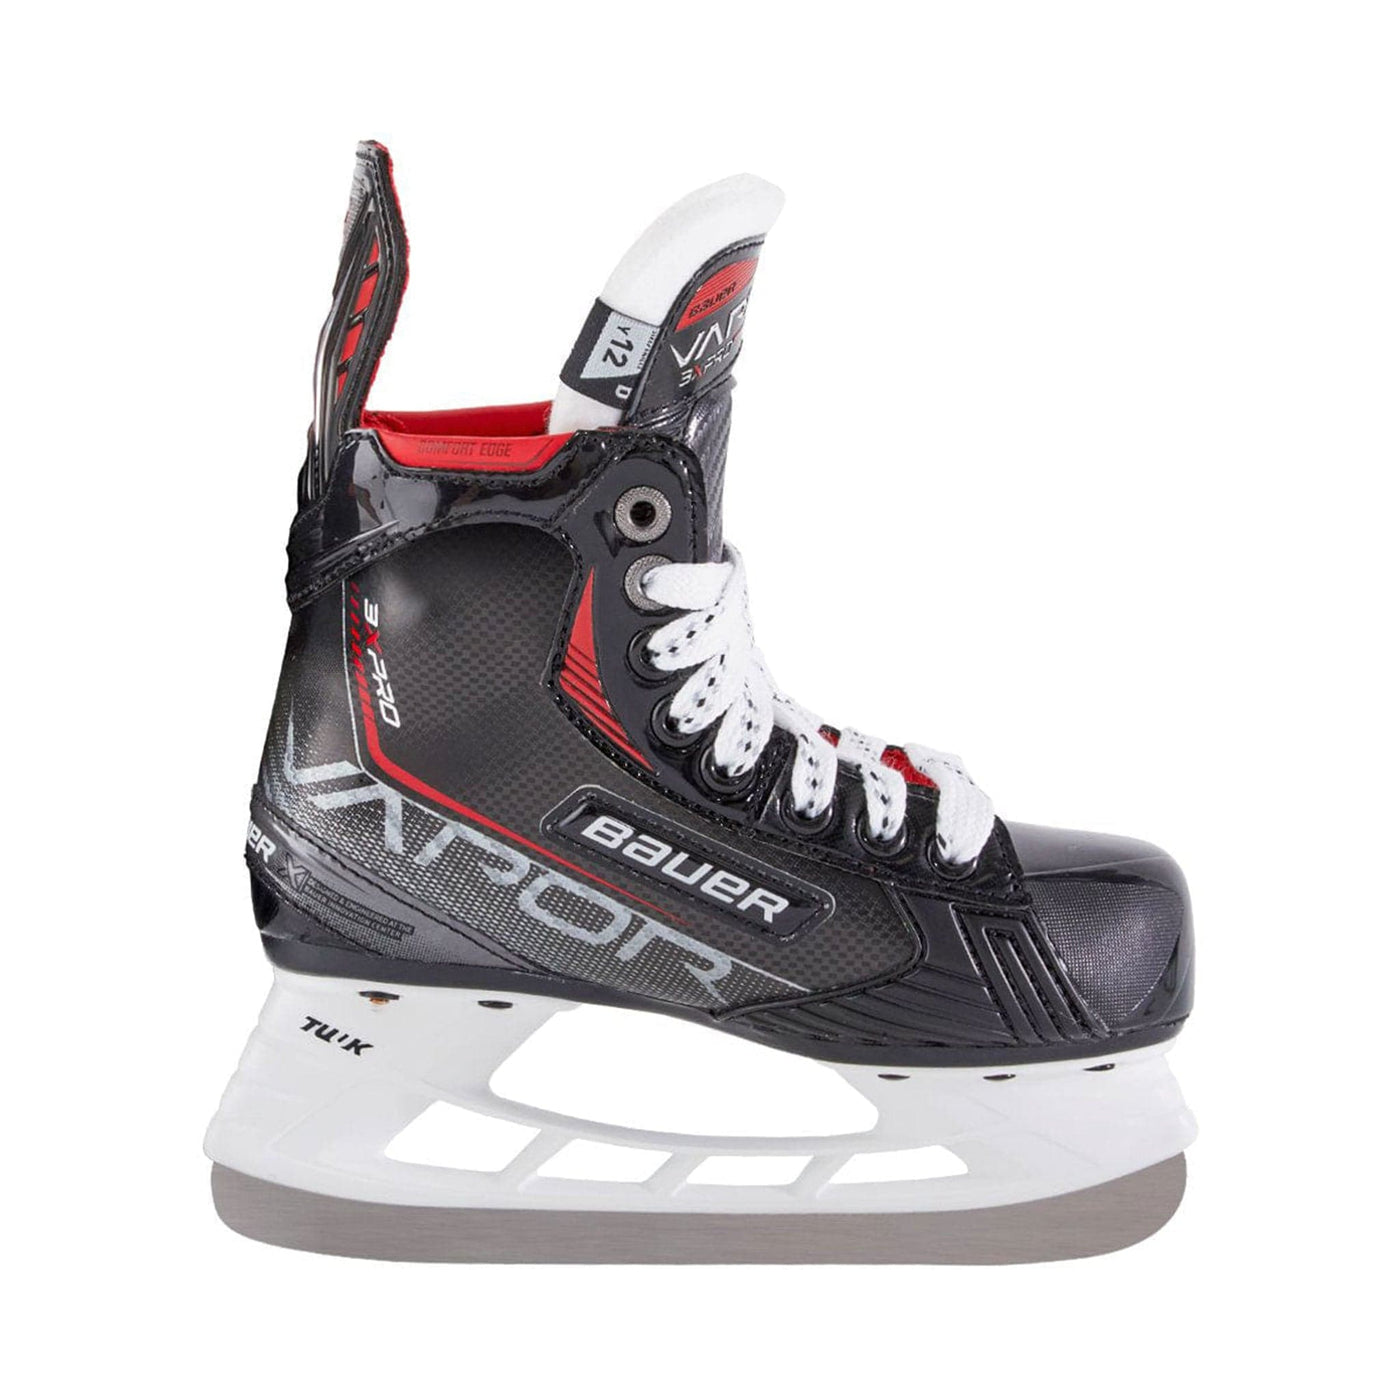 Bauer Vapor 3X Pro Youth Hockey Skates - The Hockey Shop Source For Sports